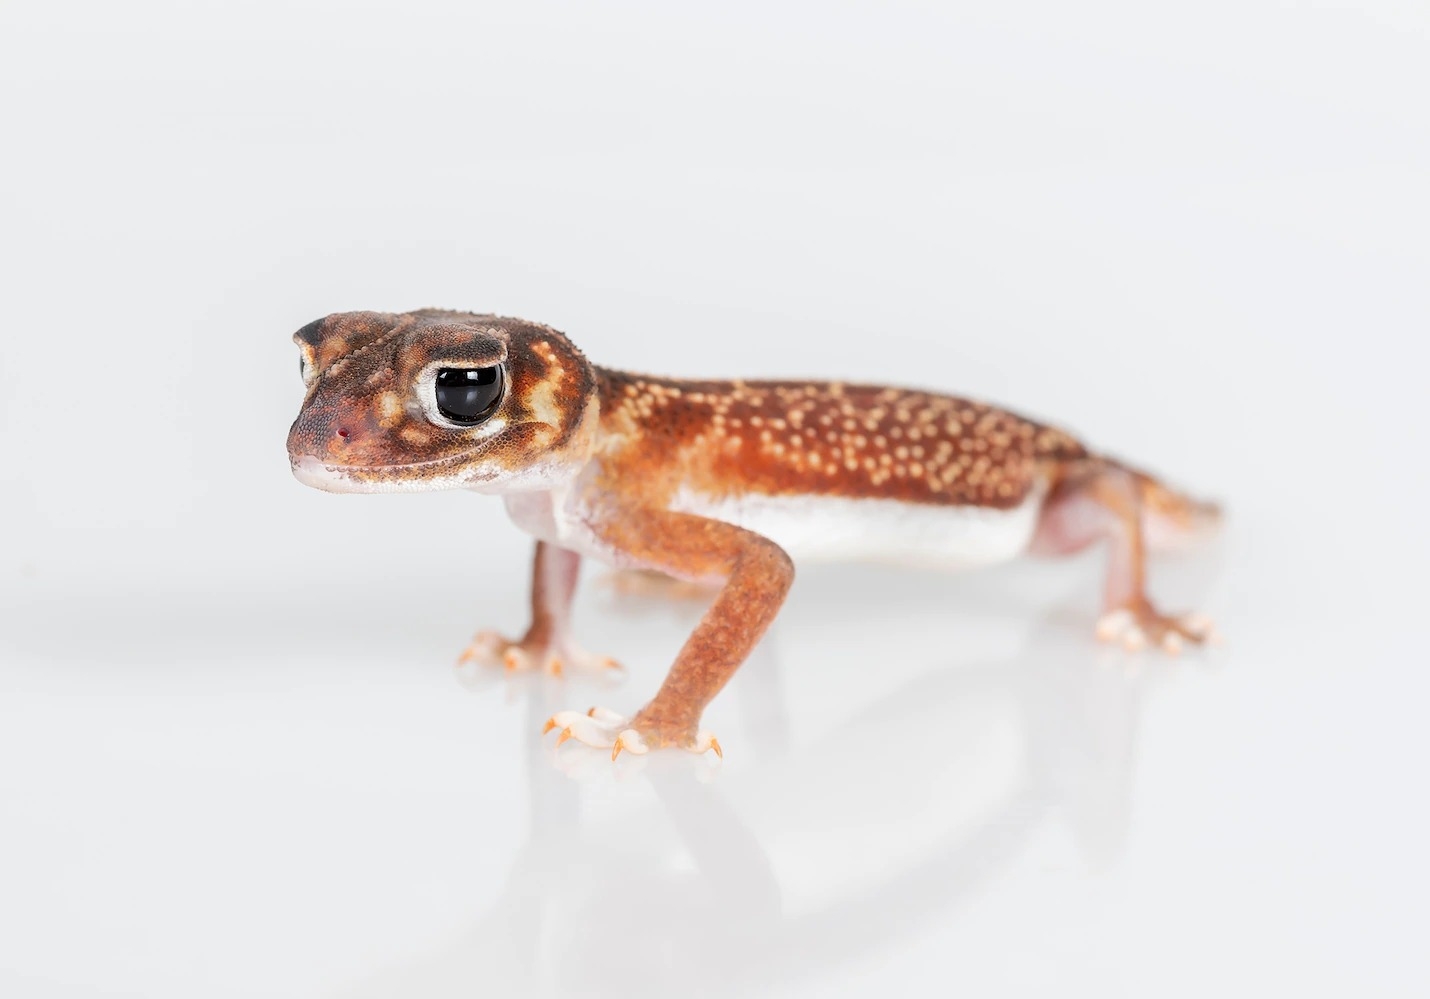 2018īּλصһֻ˽ȥβعknob-tailed gecko PHOTOGRAPH BY DOUG GIMESY